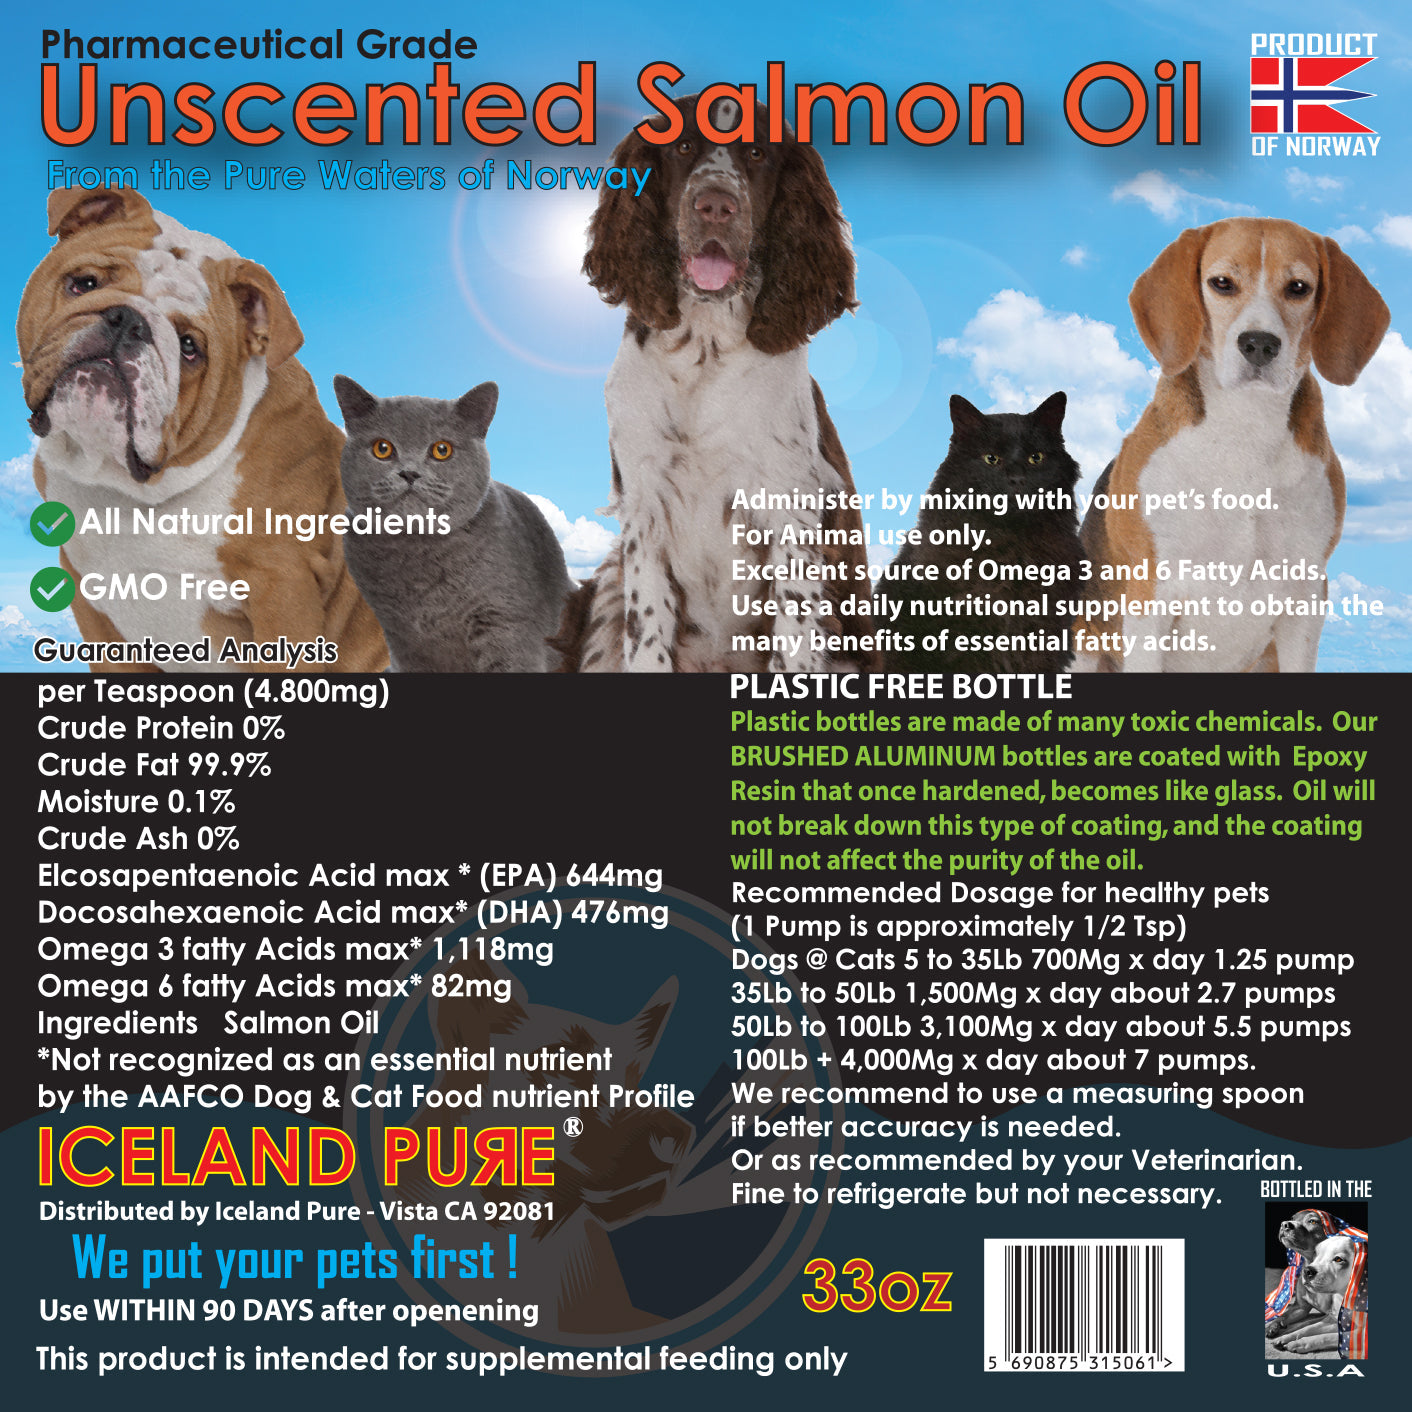 Salmon Oil (Pharmaceutical Grade & Unscented) - 8.75oz